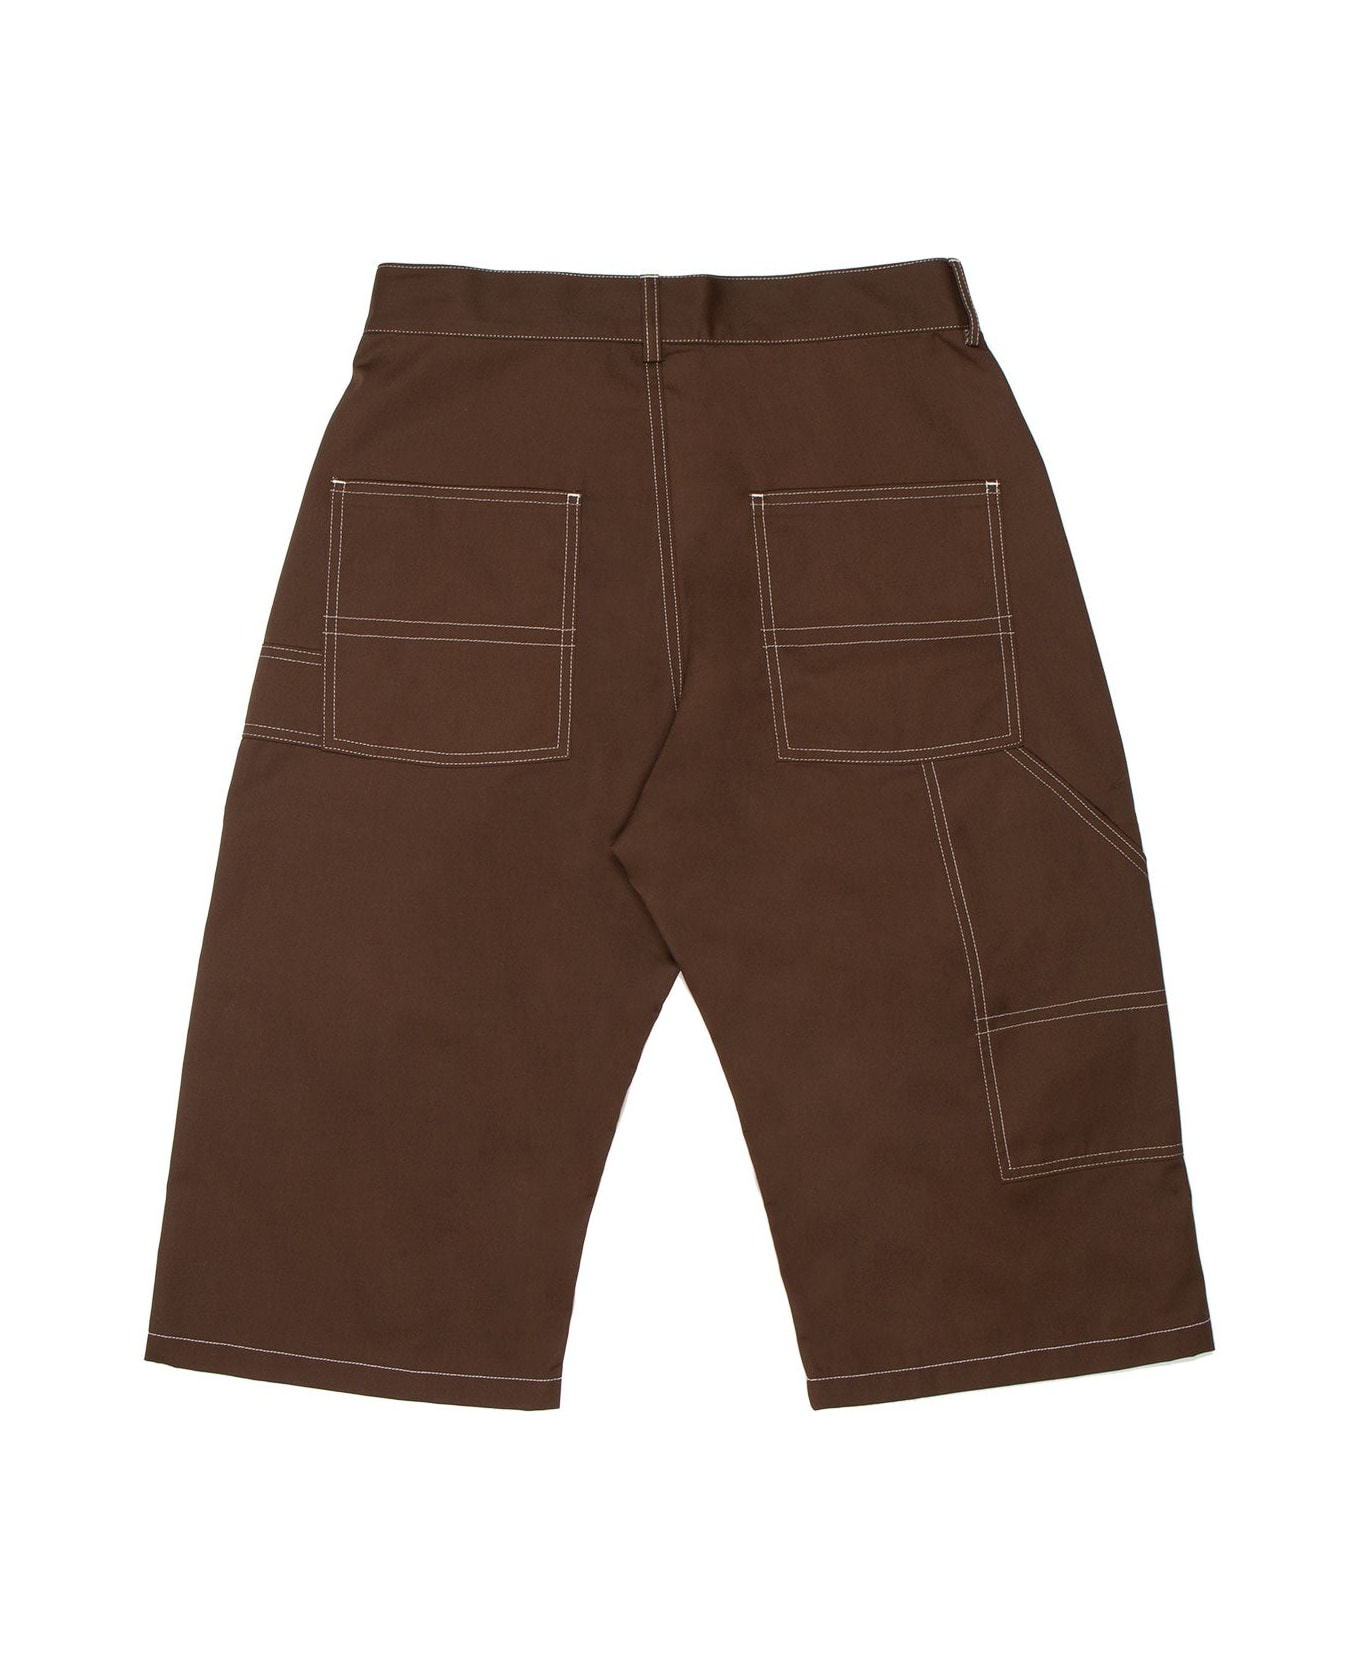 PACCBET Work Short Pants - BROWN ショートパンツ